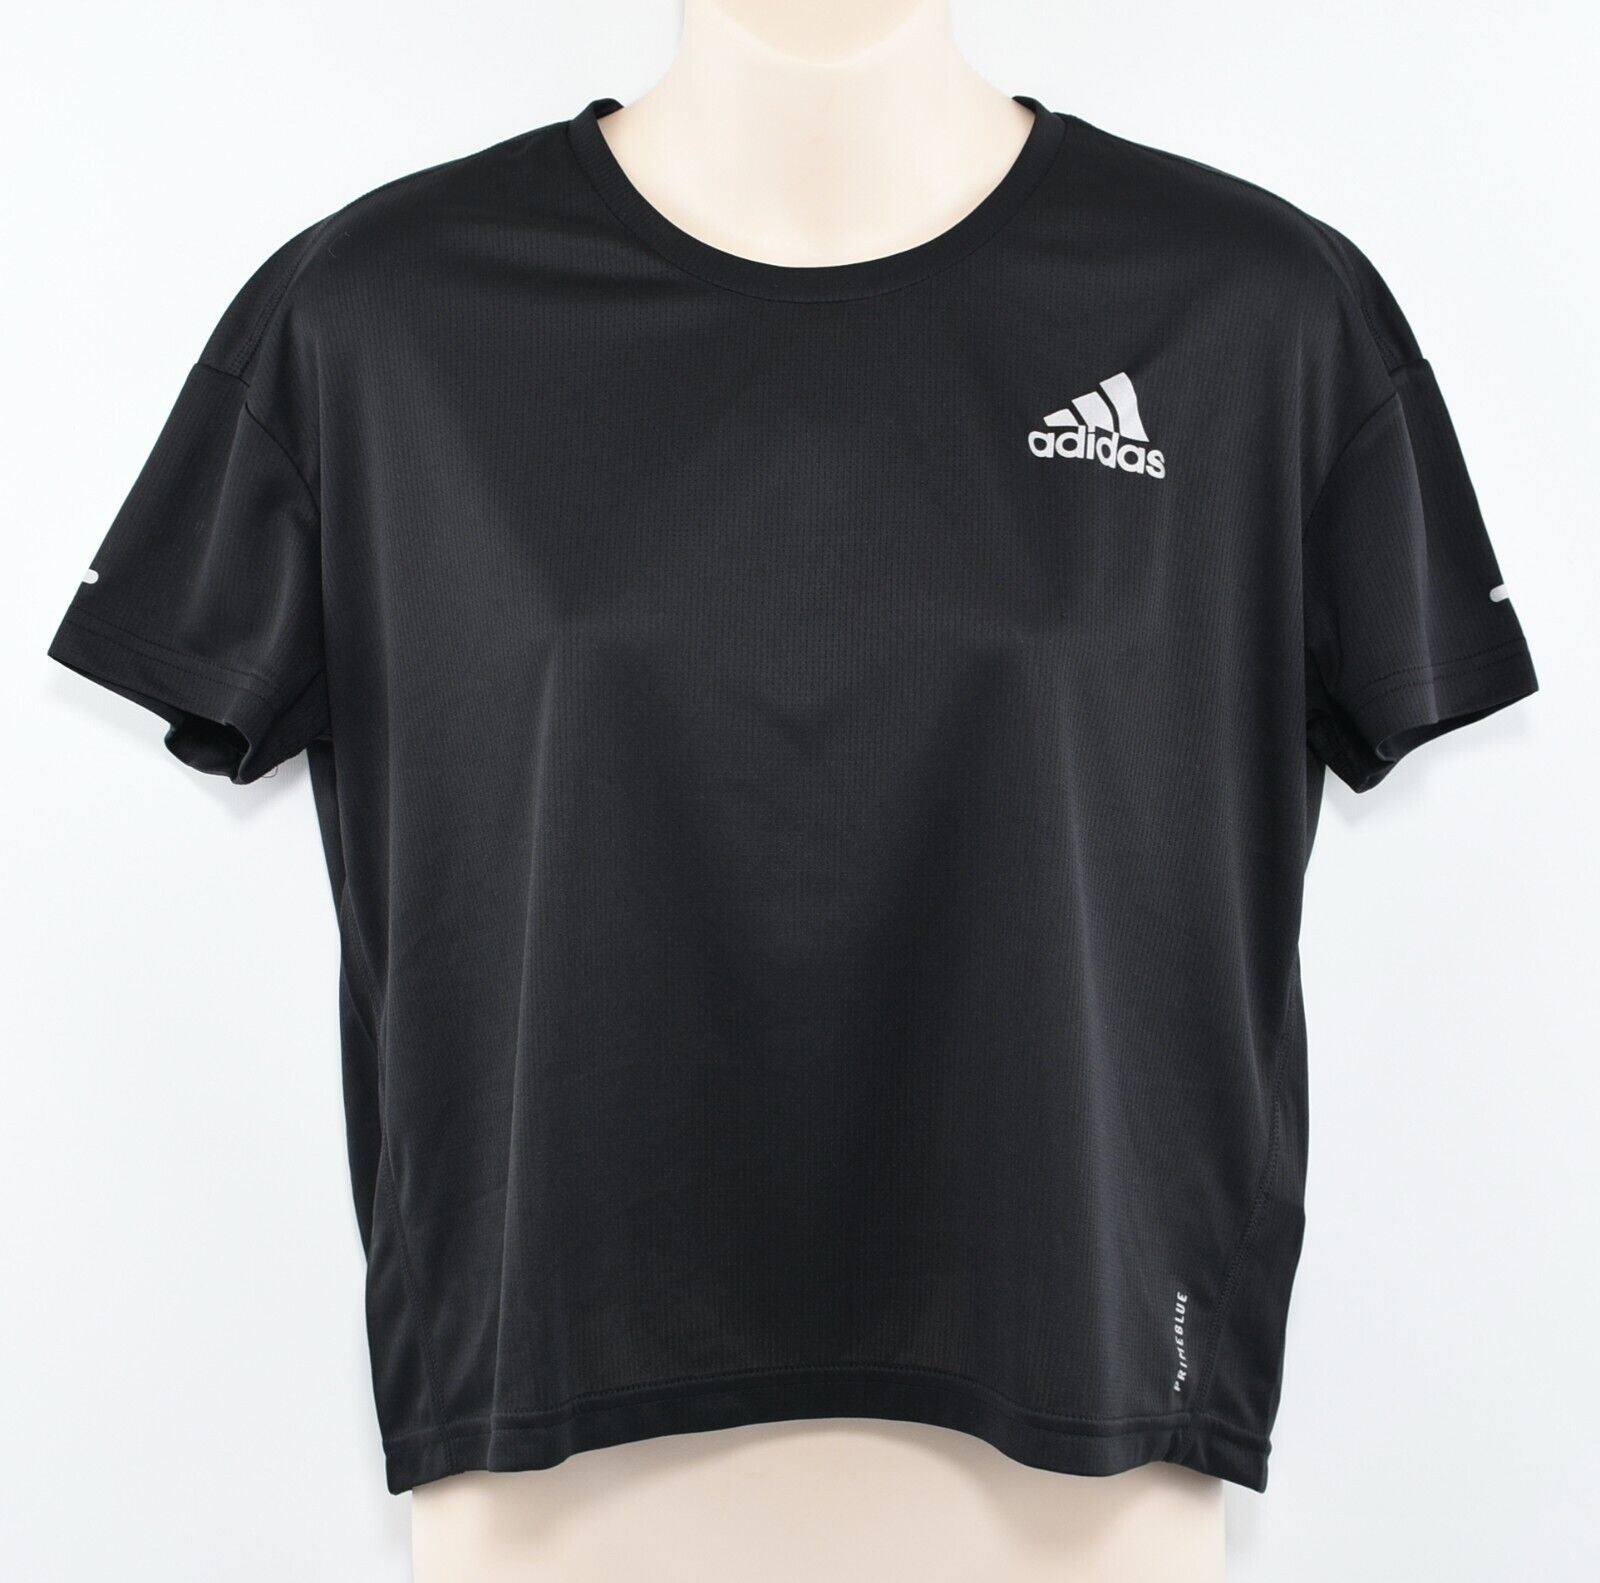 ADIDAS Women's Primeblue Sports Running Tee, T-shirt, Black, size L (UK 16-18)